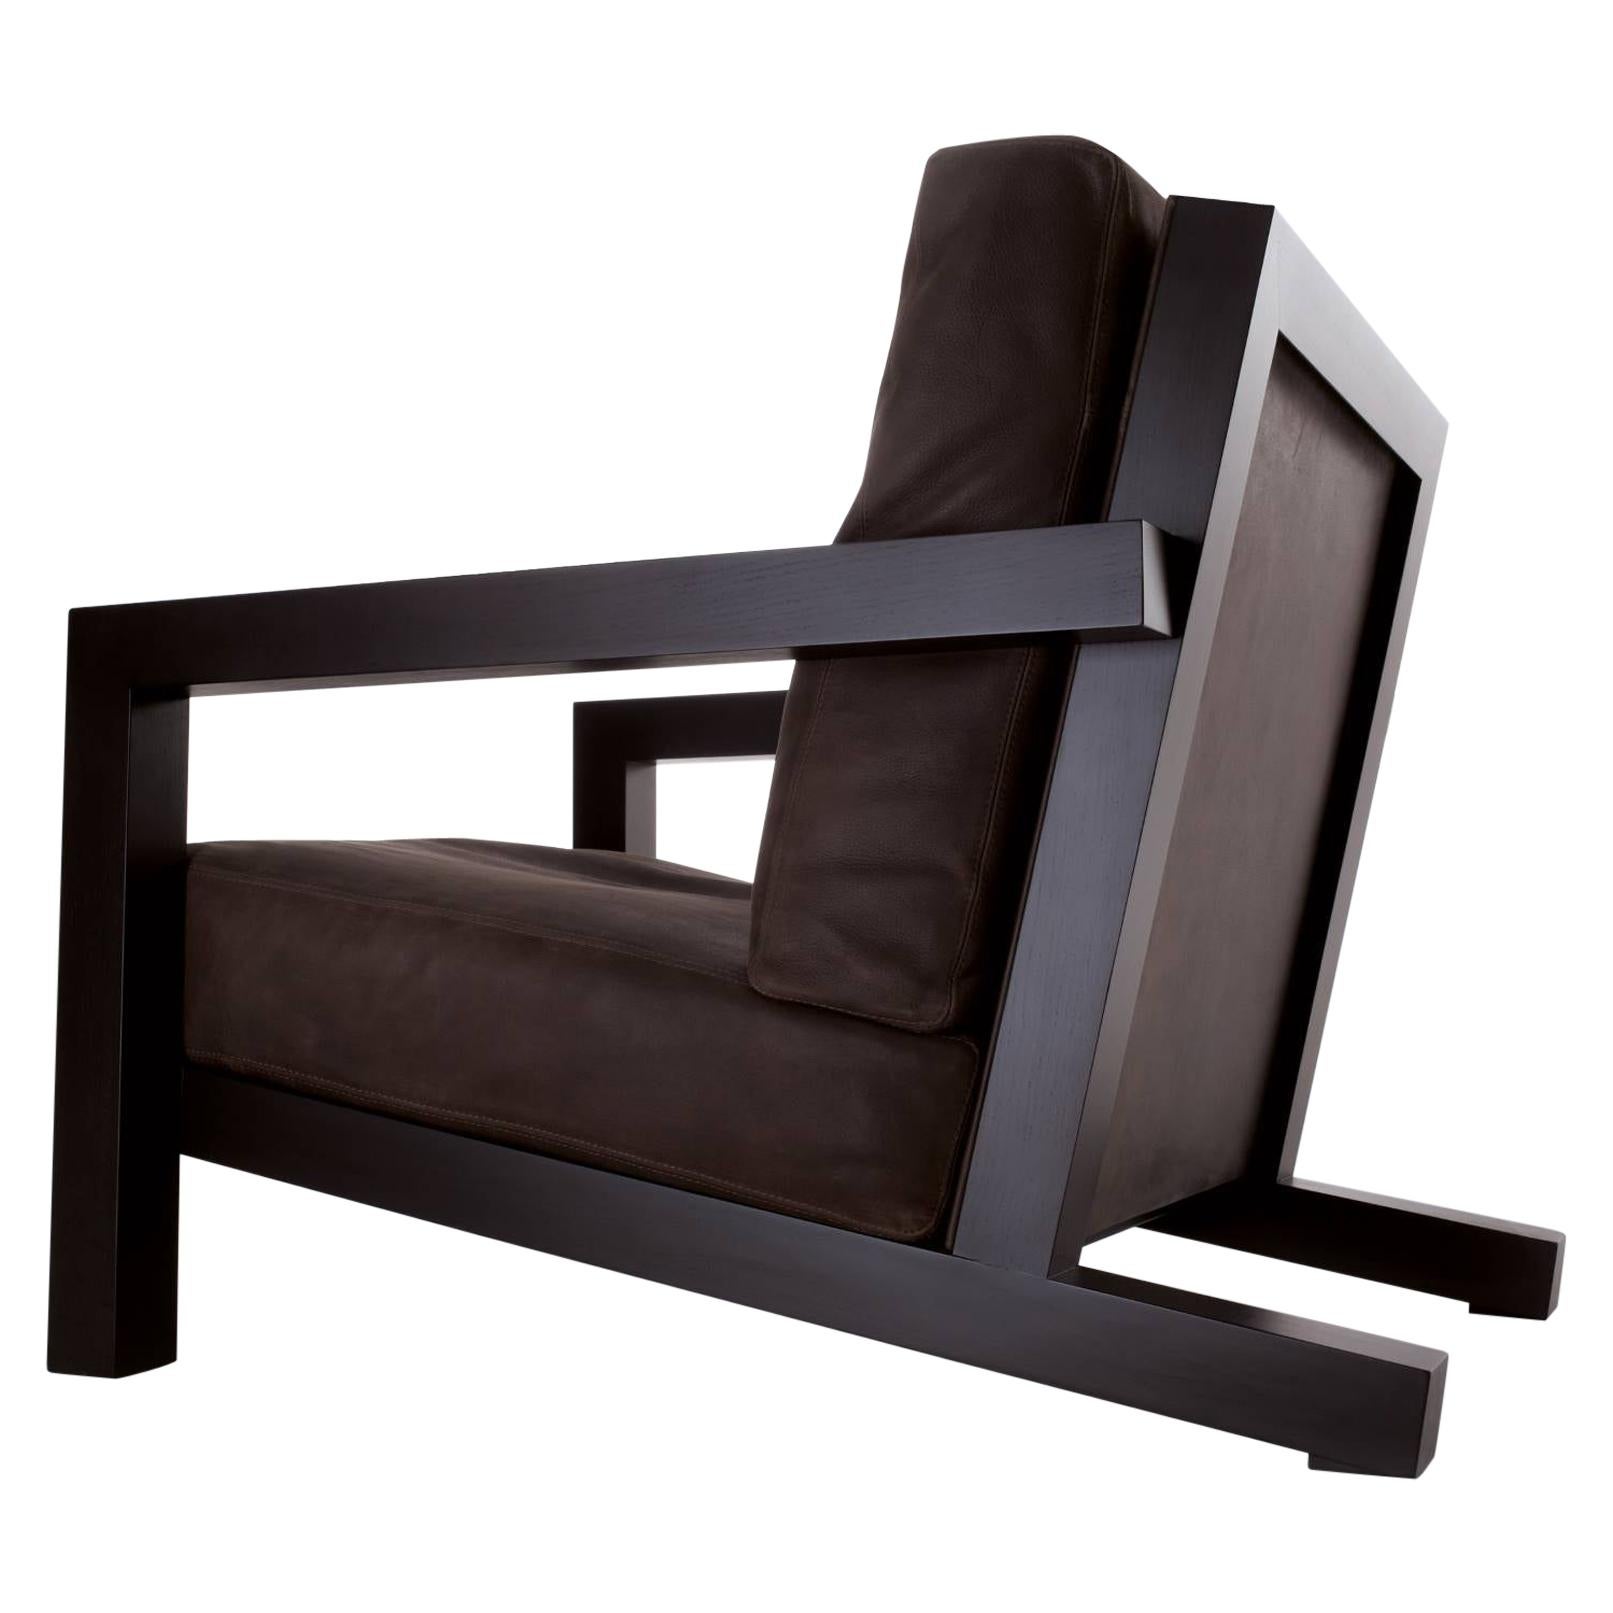 Laurameroni "BD 21" Modern Minimalist Armchair in leather and wood